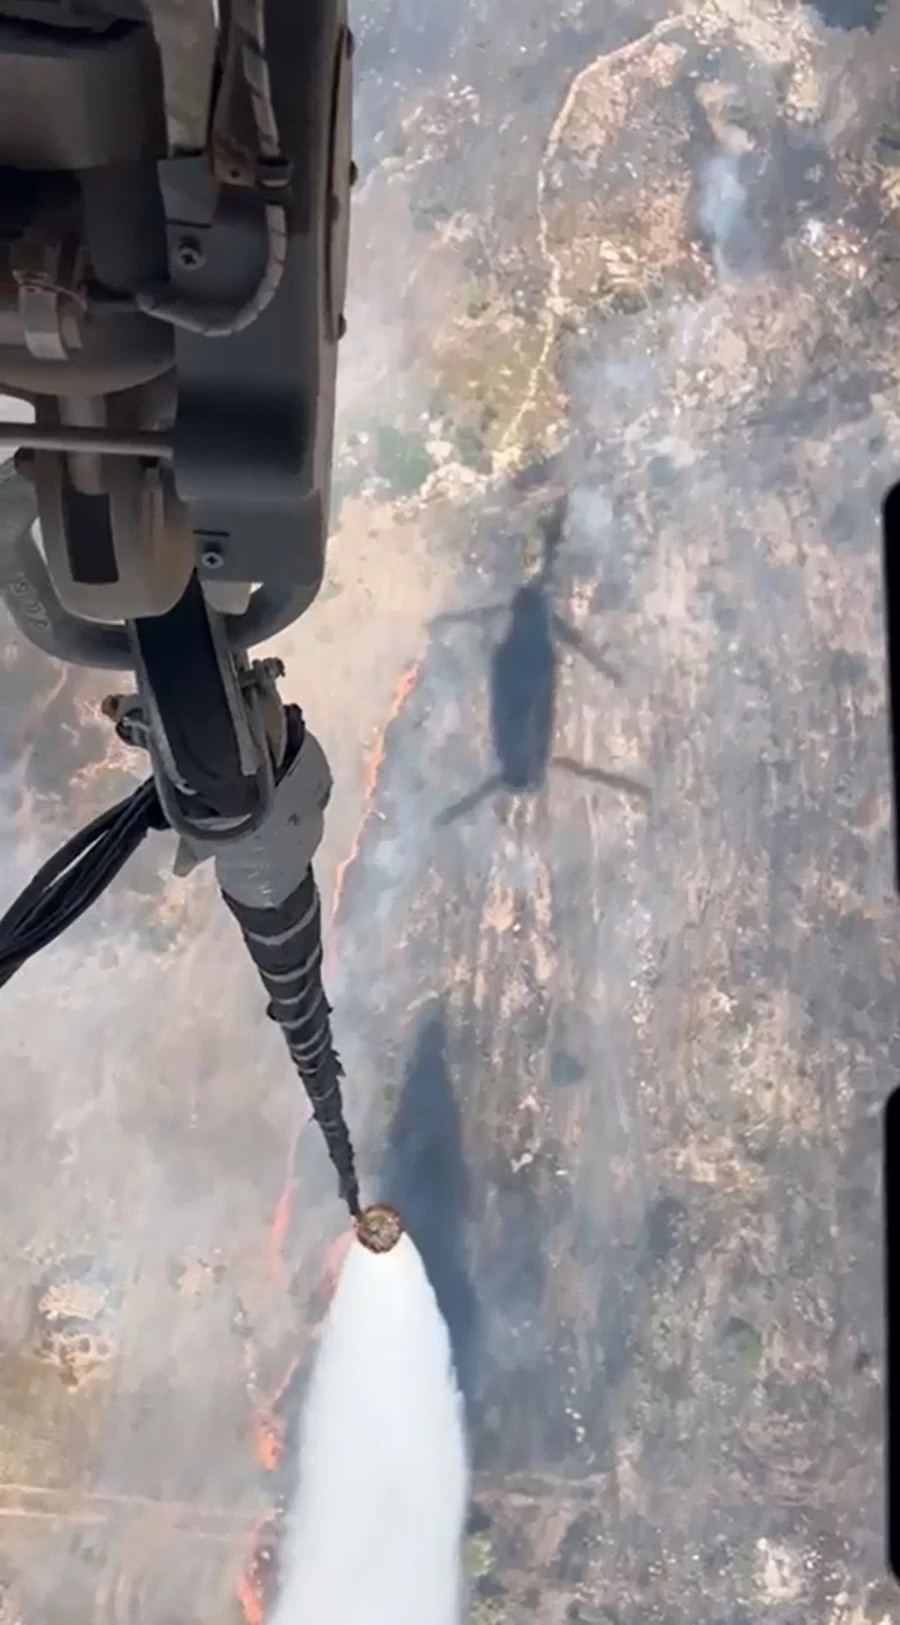  Yangın söndürme helikopterinden alevlere 